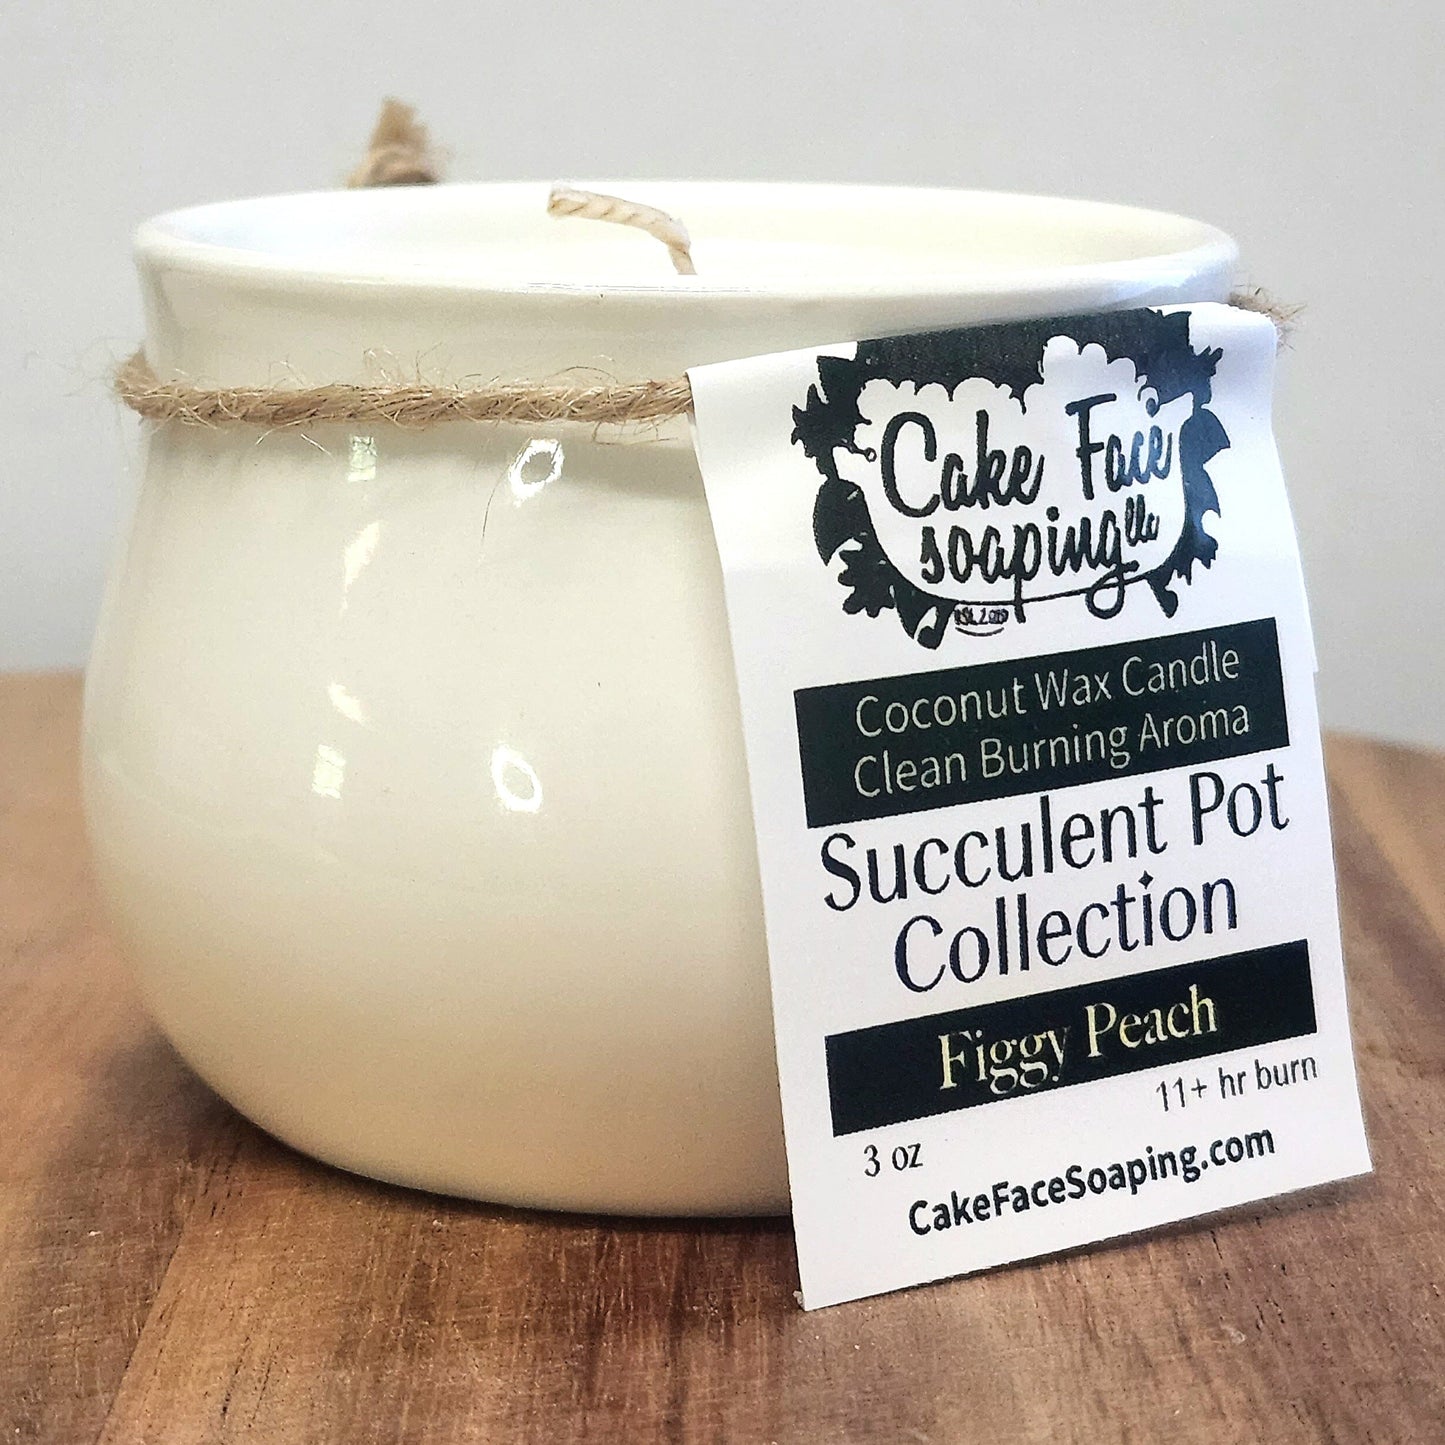 Baccarat 540 Succulent Pot Safe Fragrance Oil Coconut Wax 3 oz Candle